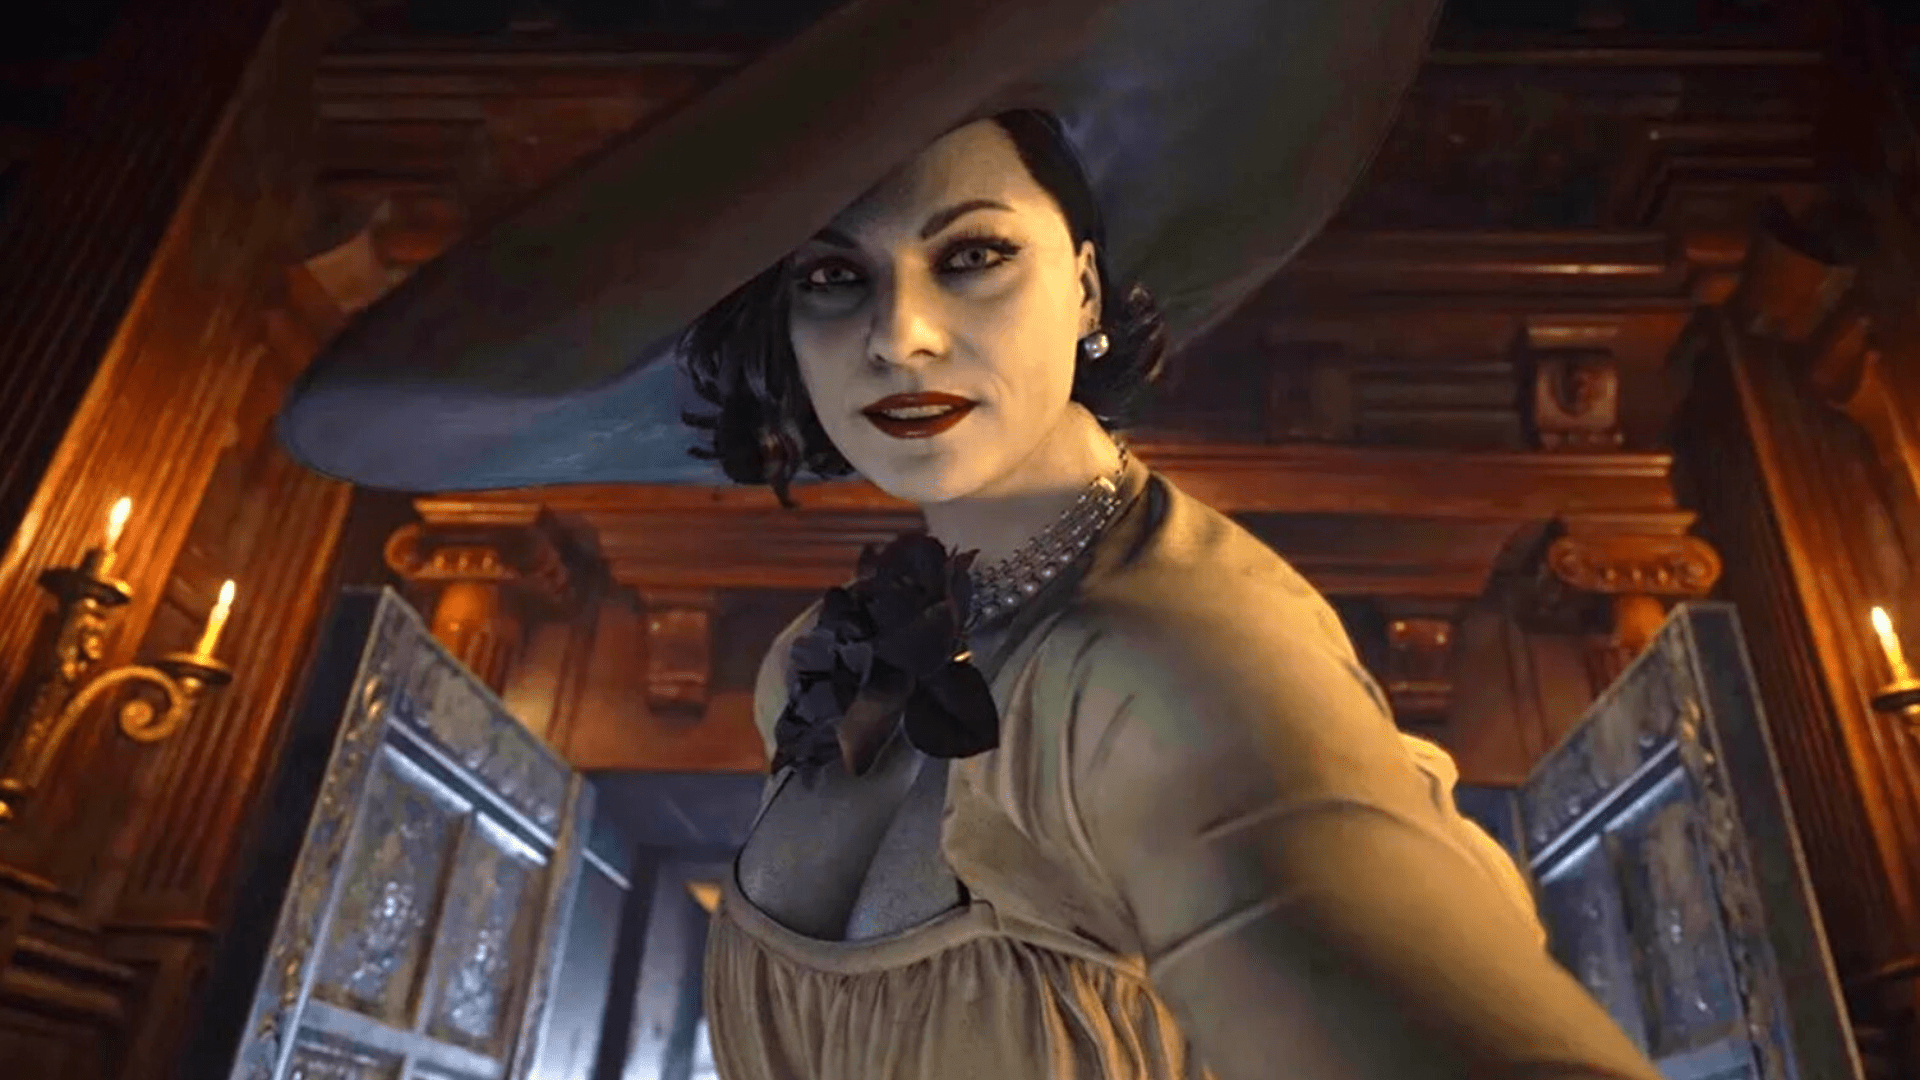 Lady Dimitrescu will be shorter for Resident Evil DLC - Gayming Magazine